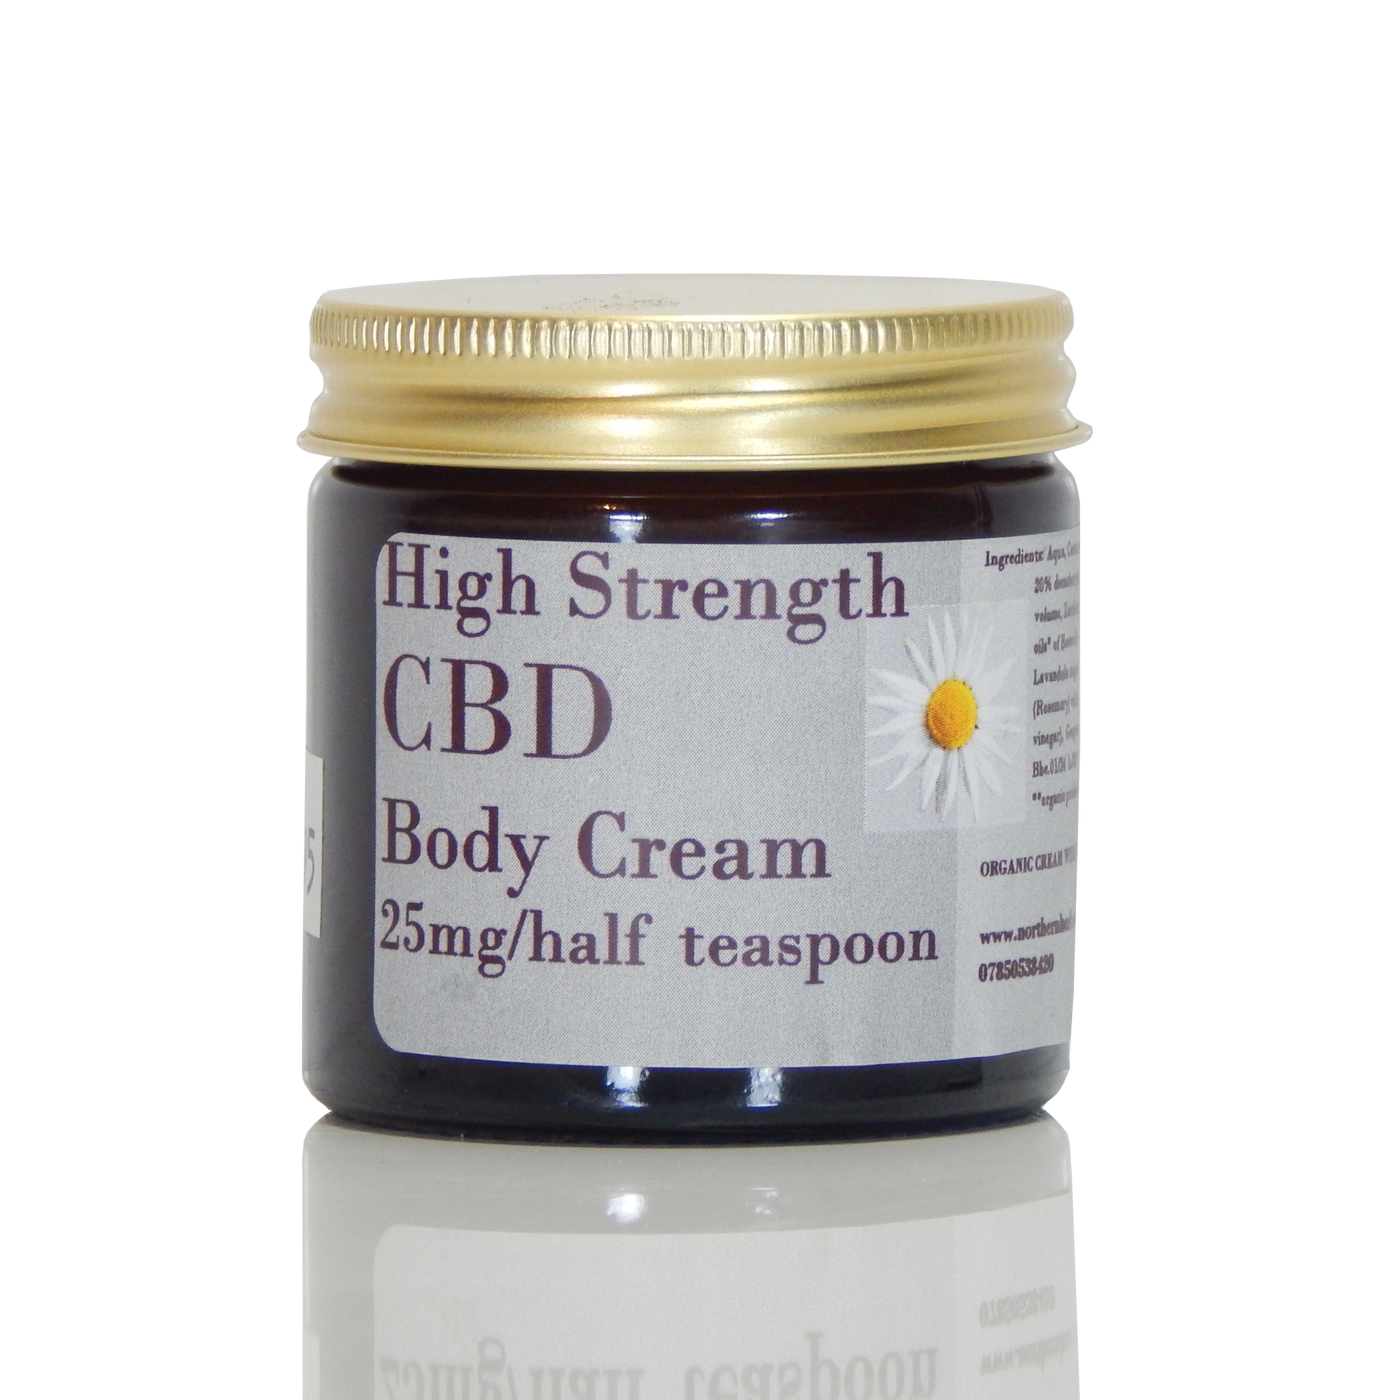 High Strength CBD Body Cream